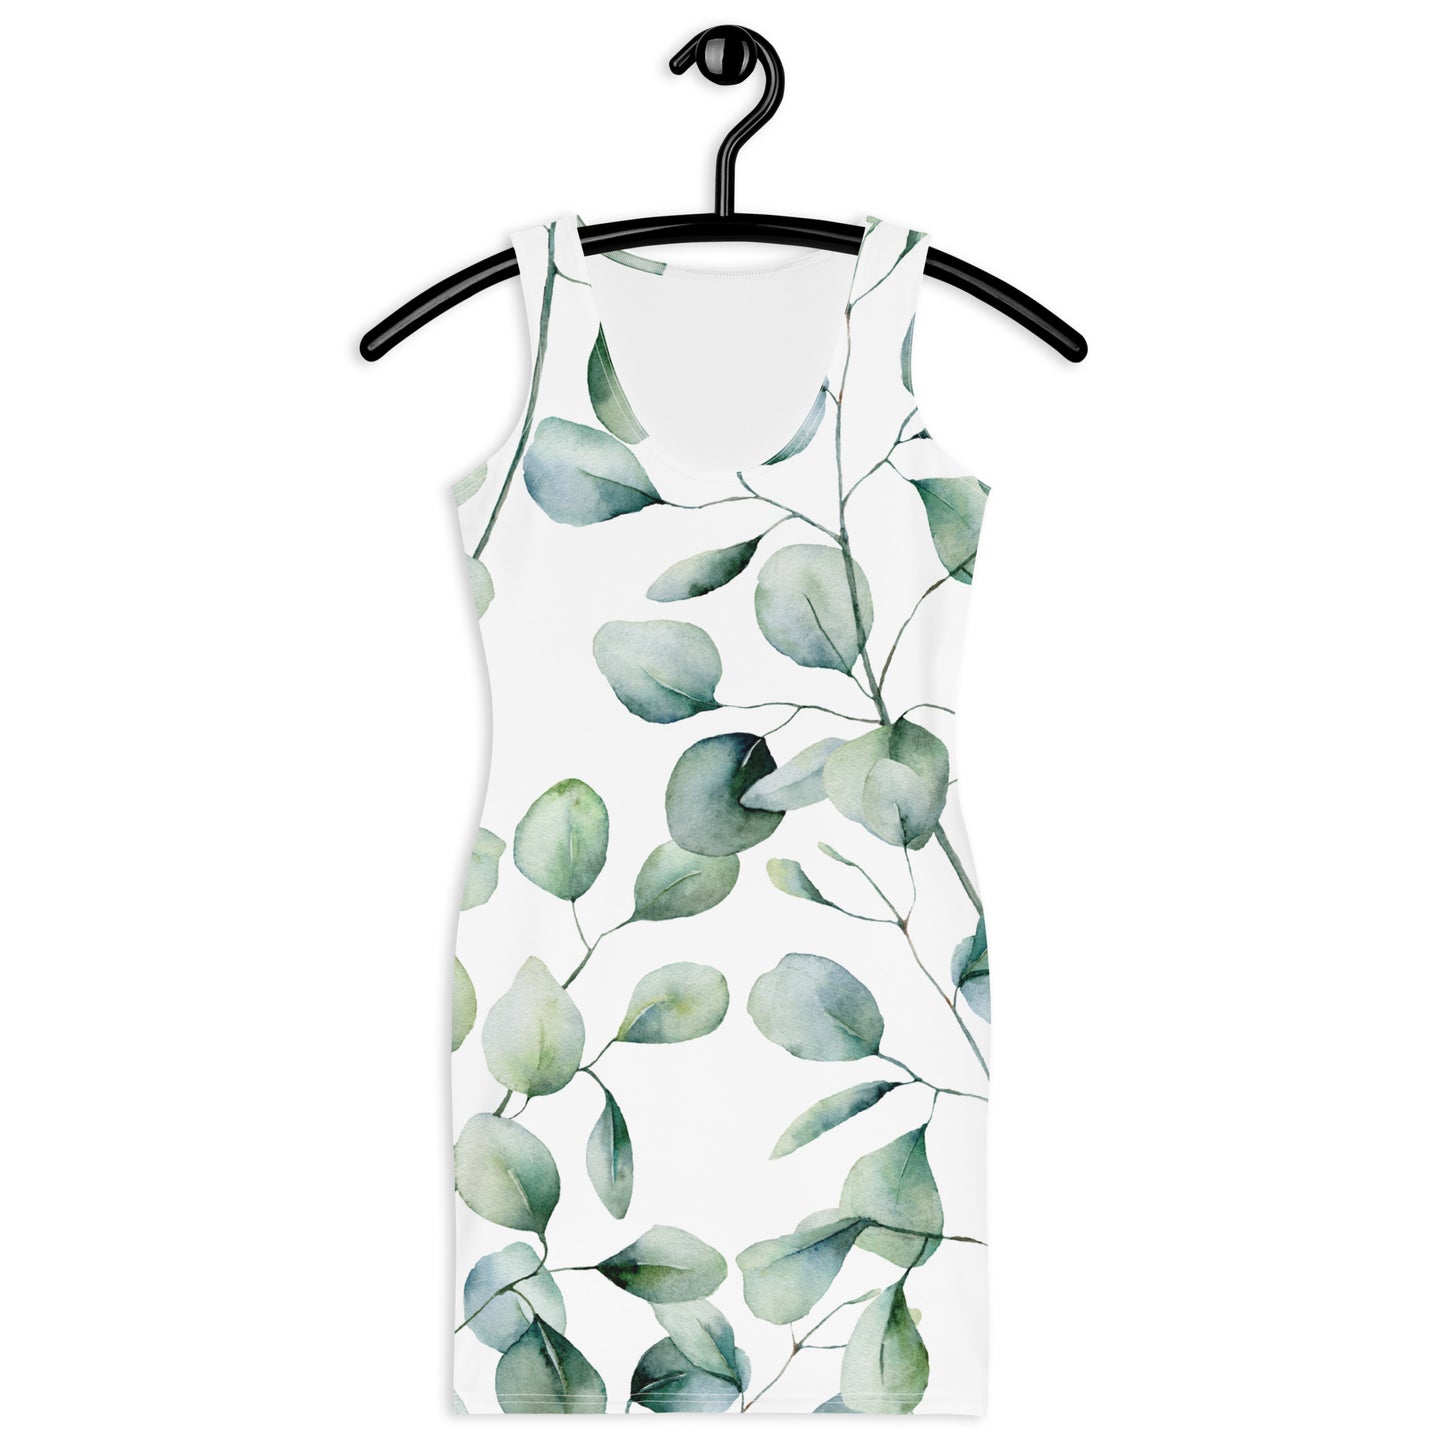 "Leaves" patterned dress